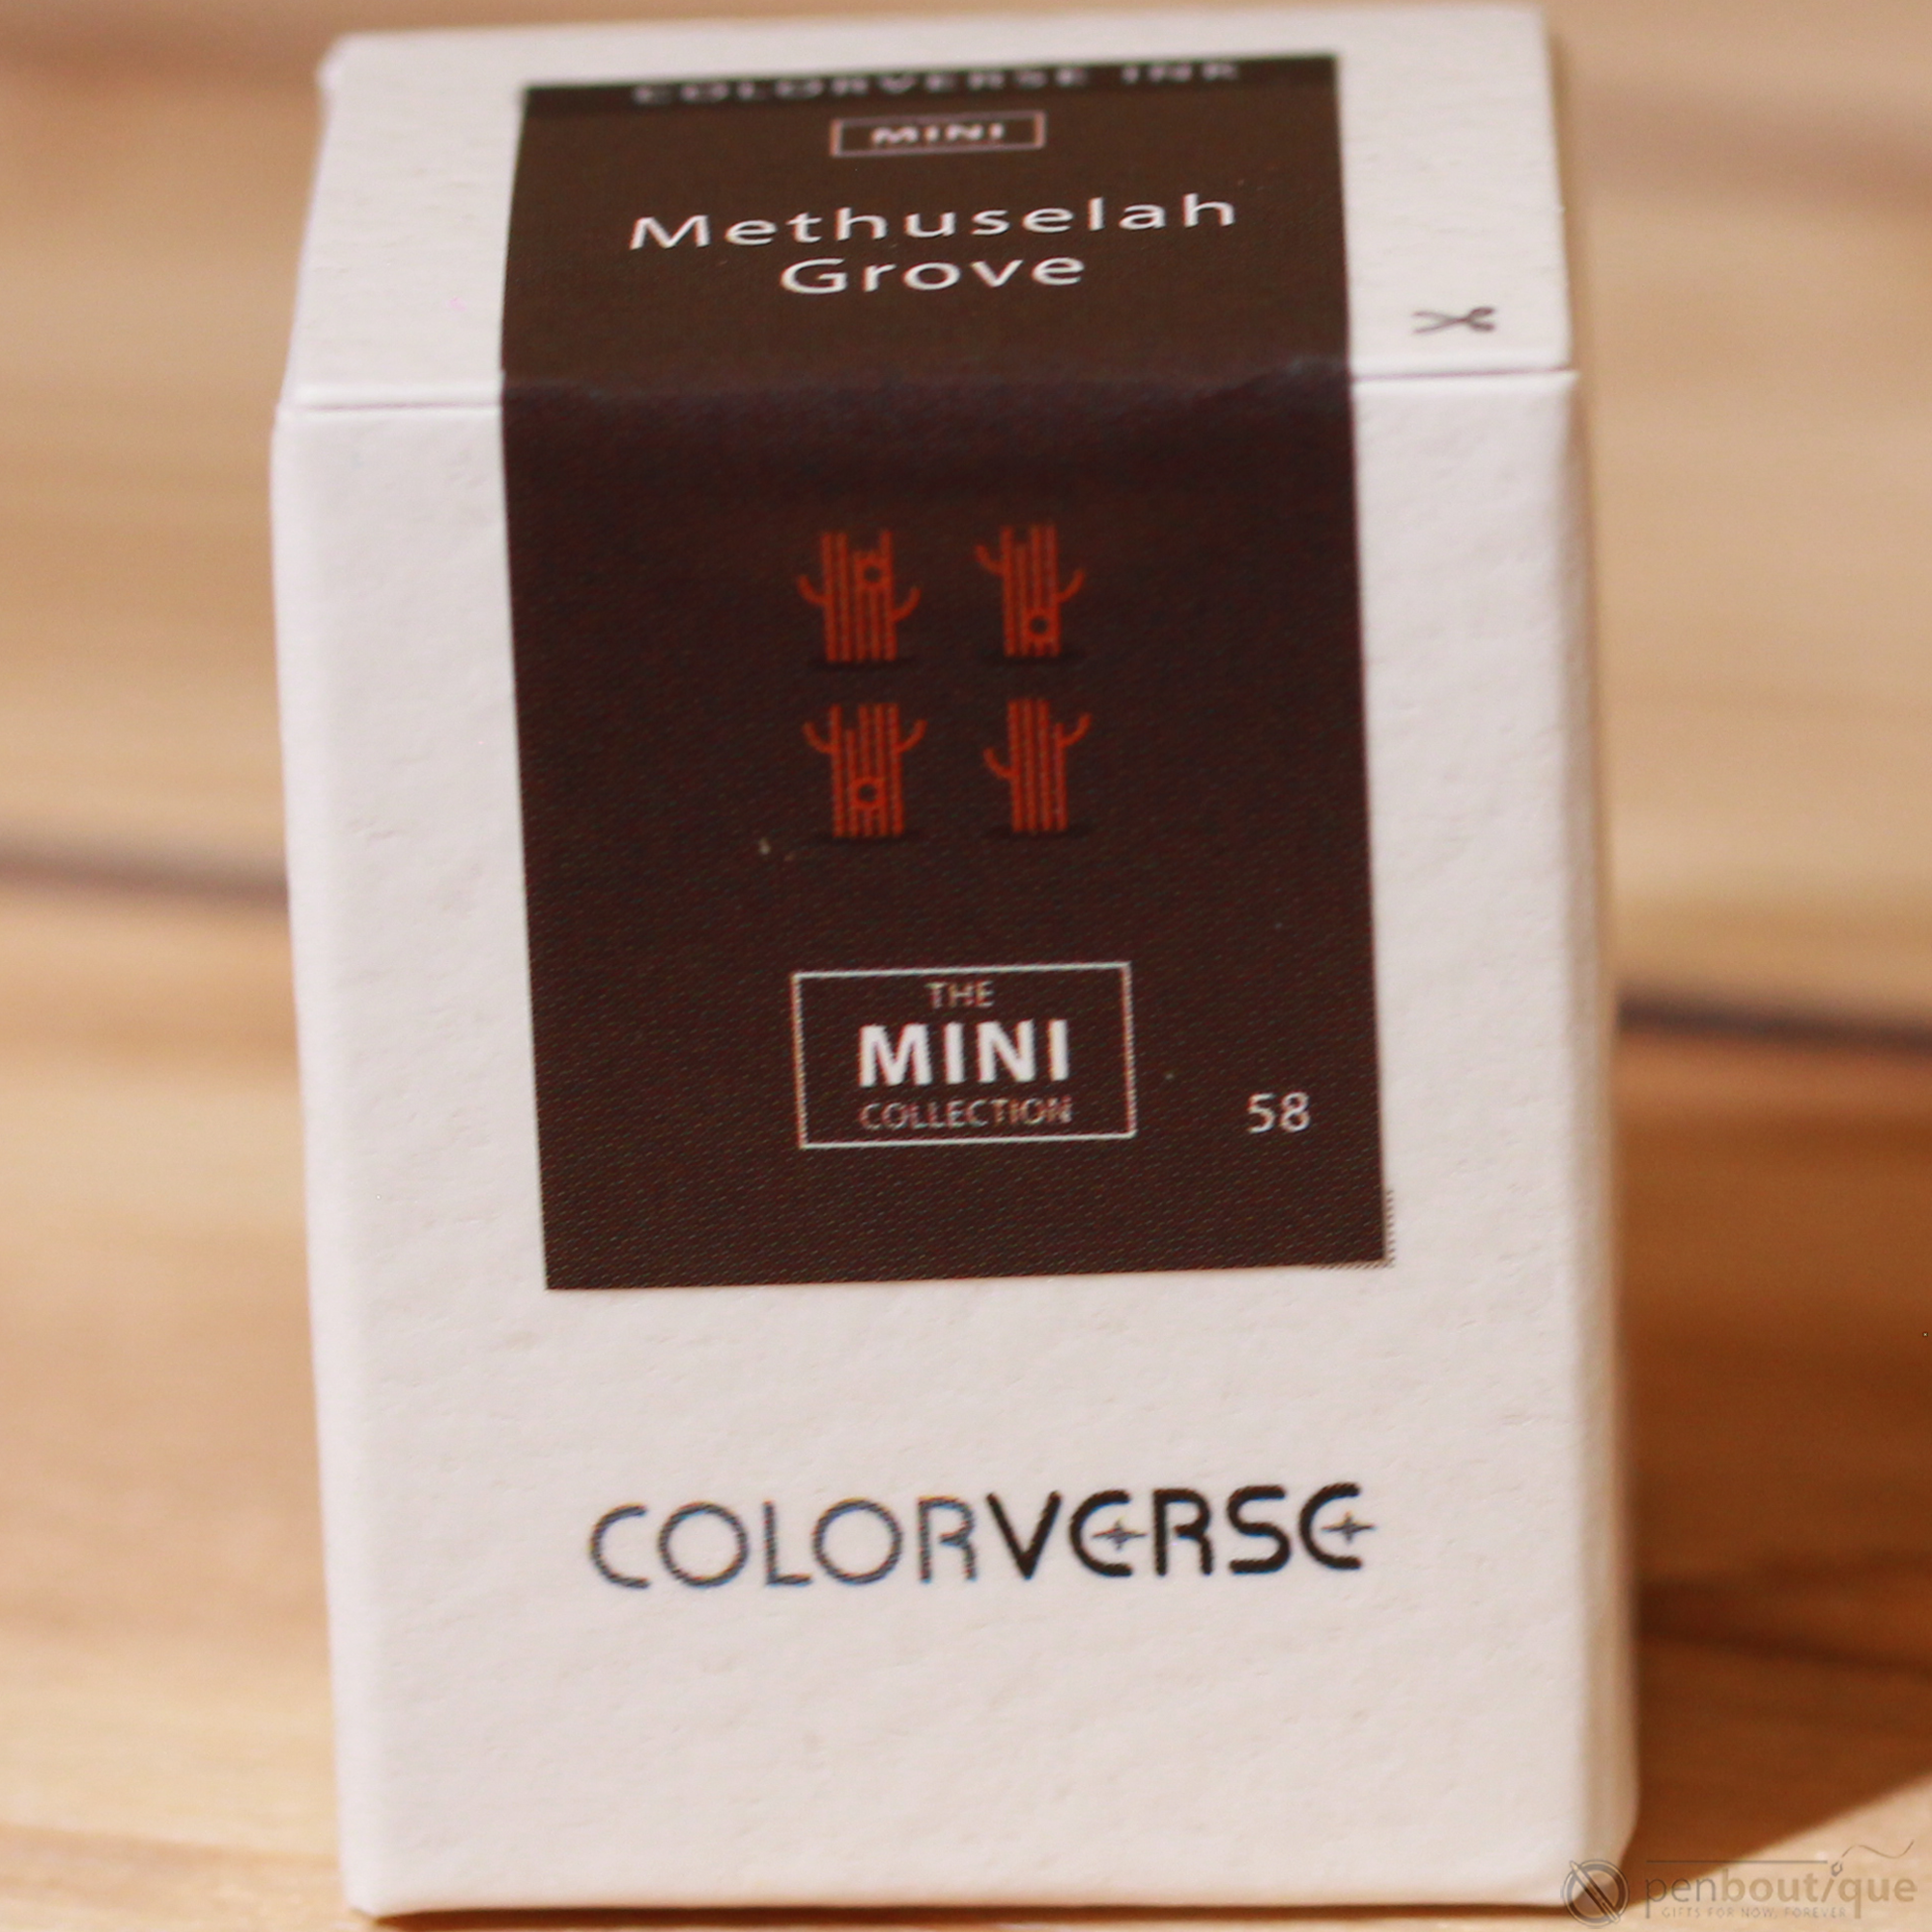 Colorverse Mini Ink - Earth Edition - Methuselah Grove - 5ml-Pen Boutique Ltd